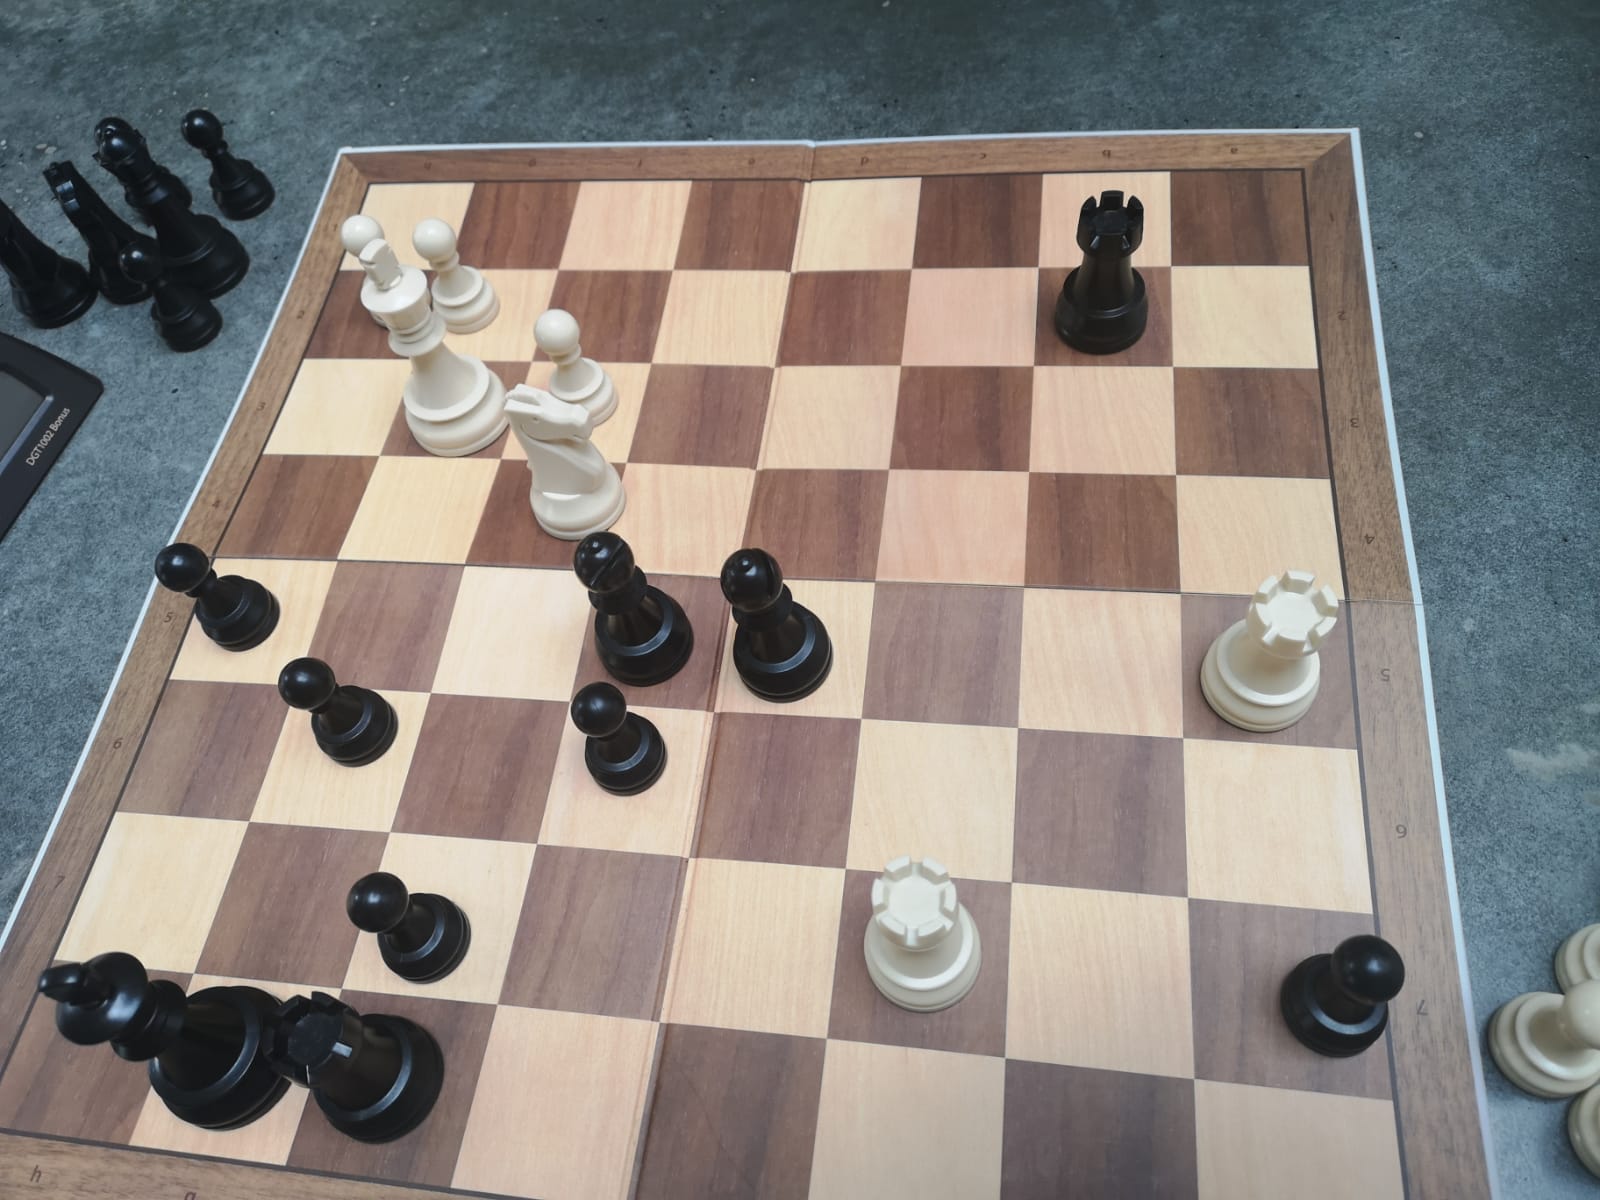 Tournament: Chess